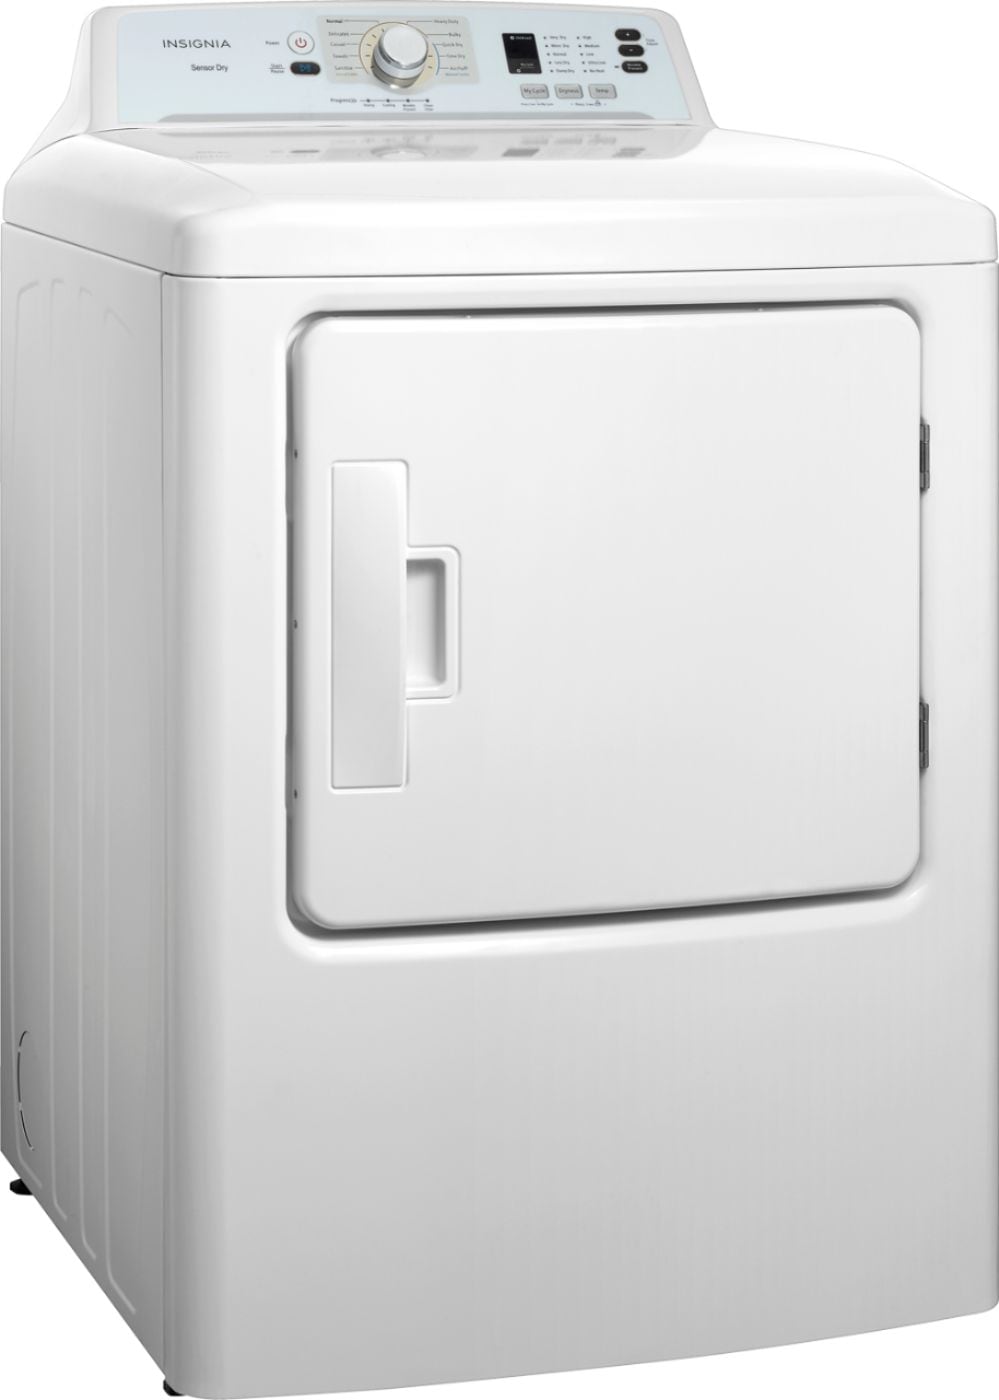 Insignia™ - 6.7 Cu. Ft. Gas Dryer - White_1